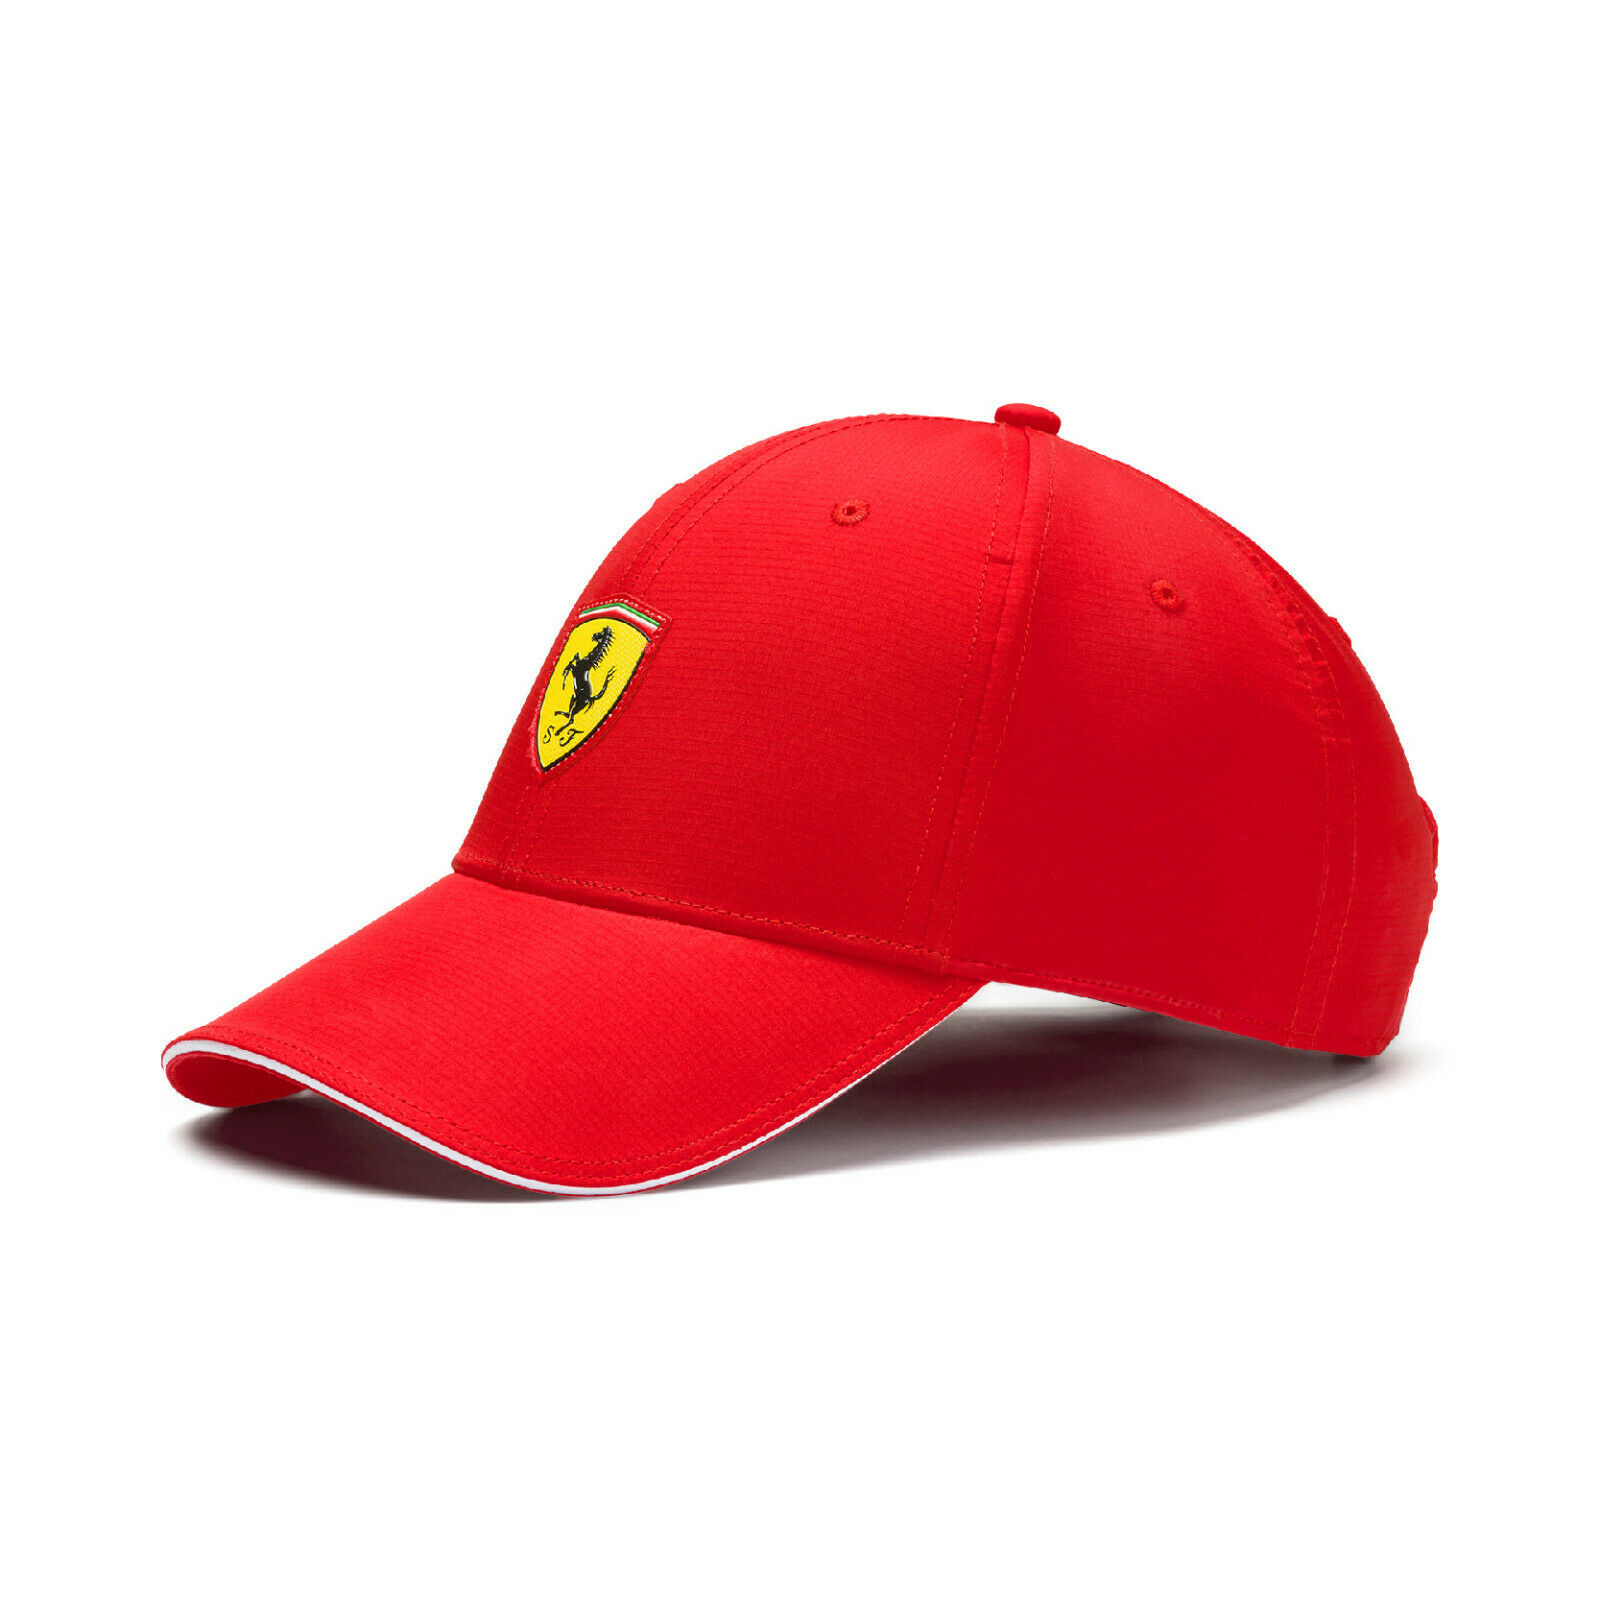 Ferrari Fanwear Baseball Cap Basecap Kappe in Rot mit Logo von Puma 